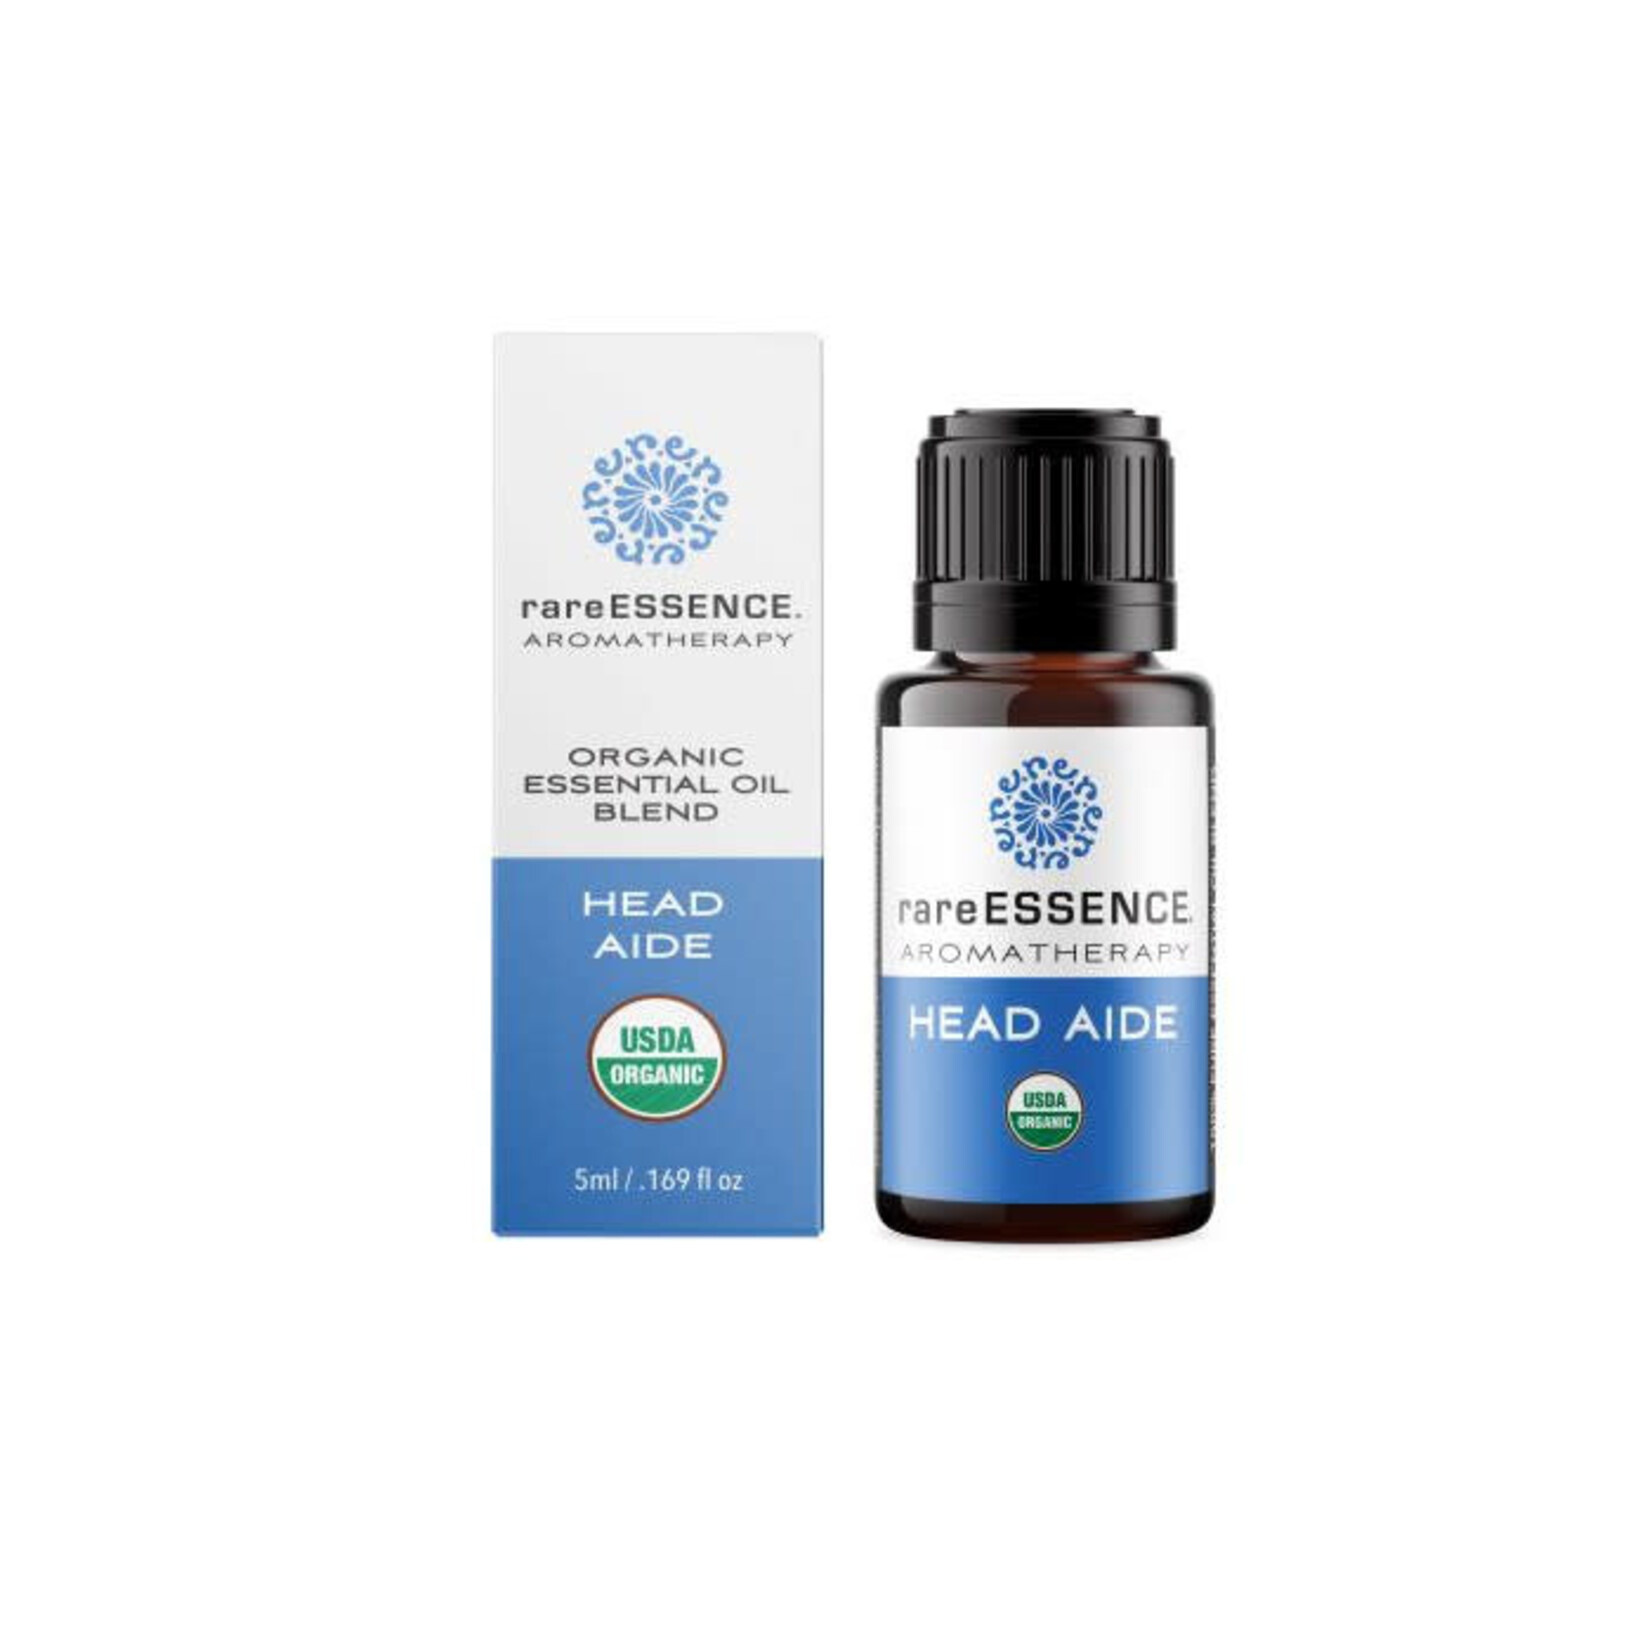 rareESSENCE Aromatherapy Organic Head Aide Essential Oil Blend